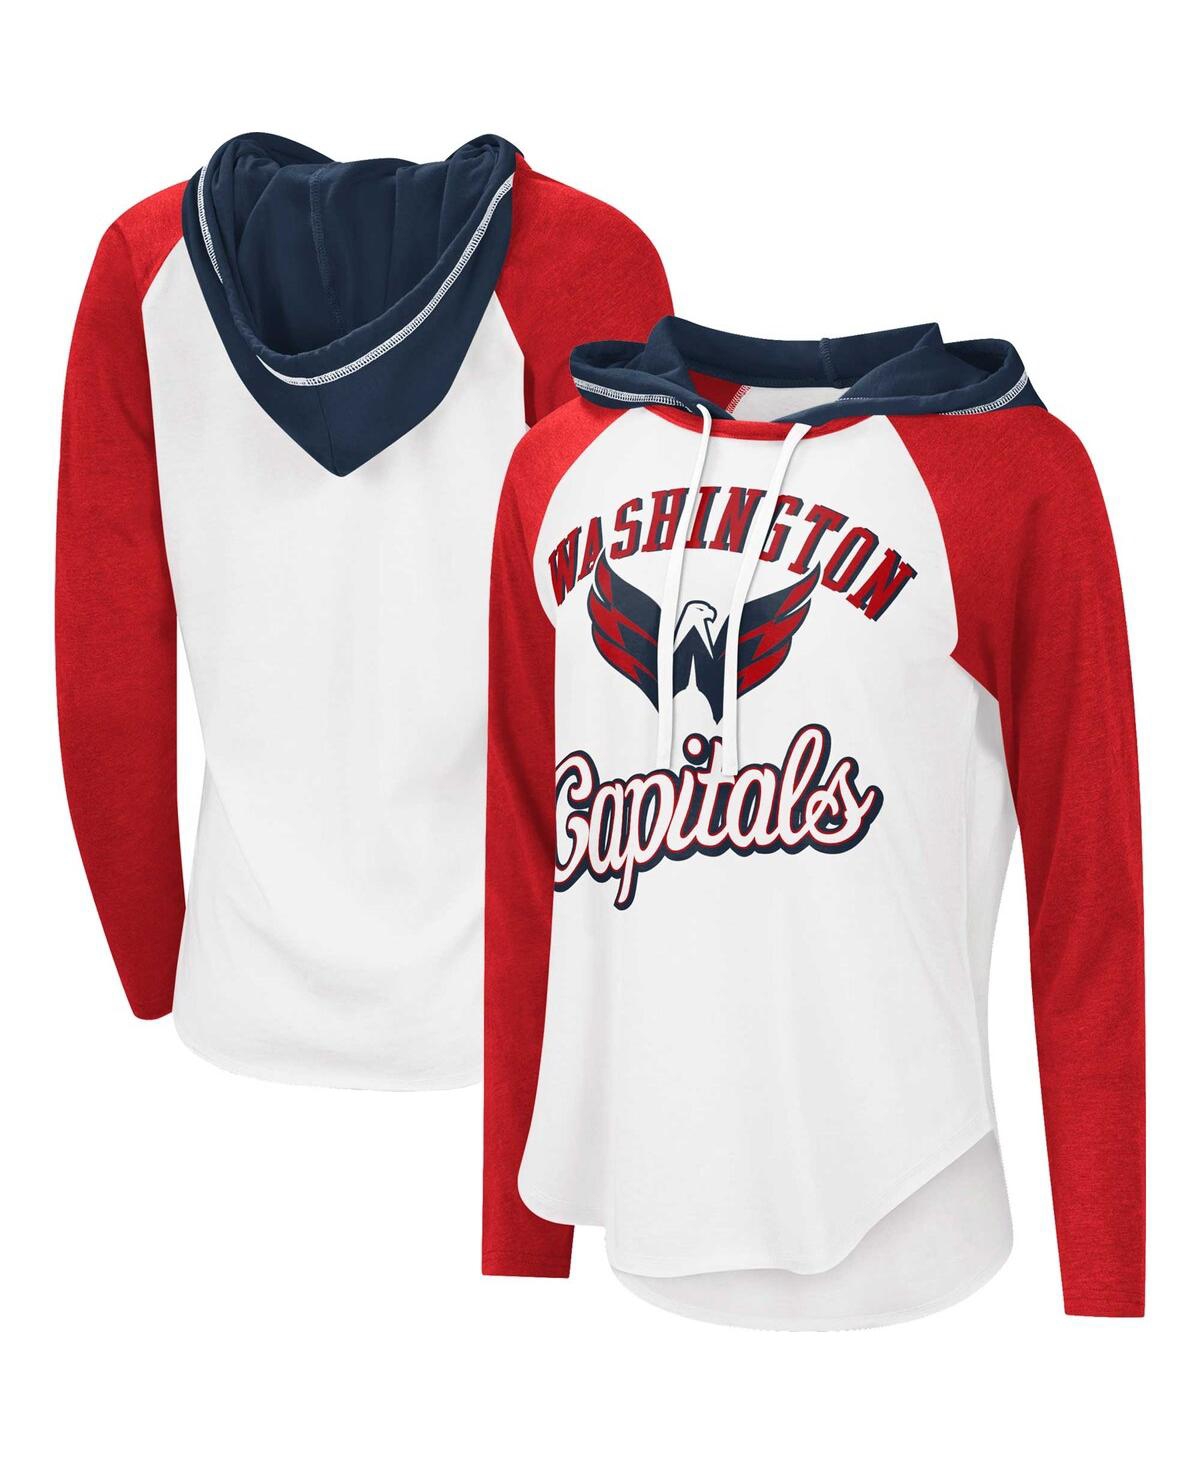 Women's Washington Capitals Starter Red/Navy Baseline Raglan Pullover  Sweatshirt